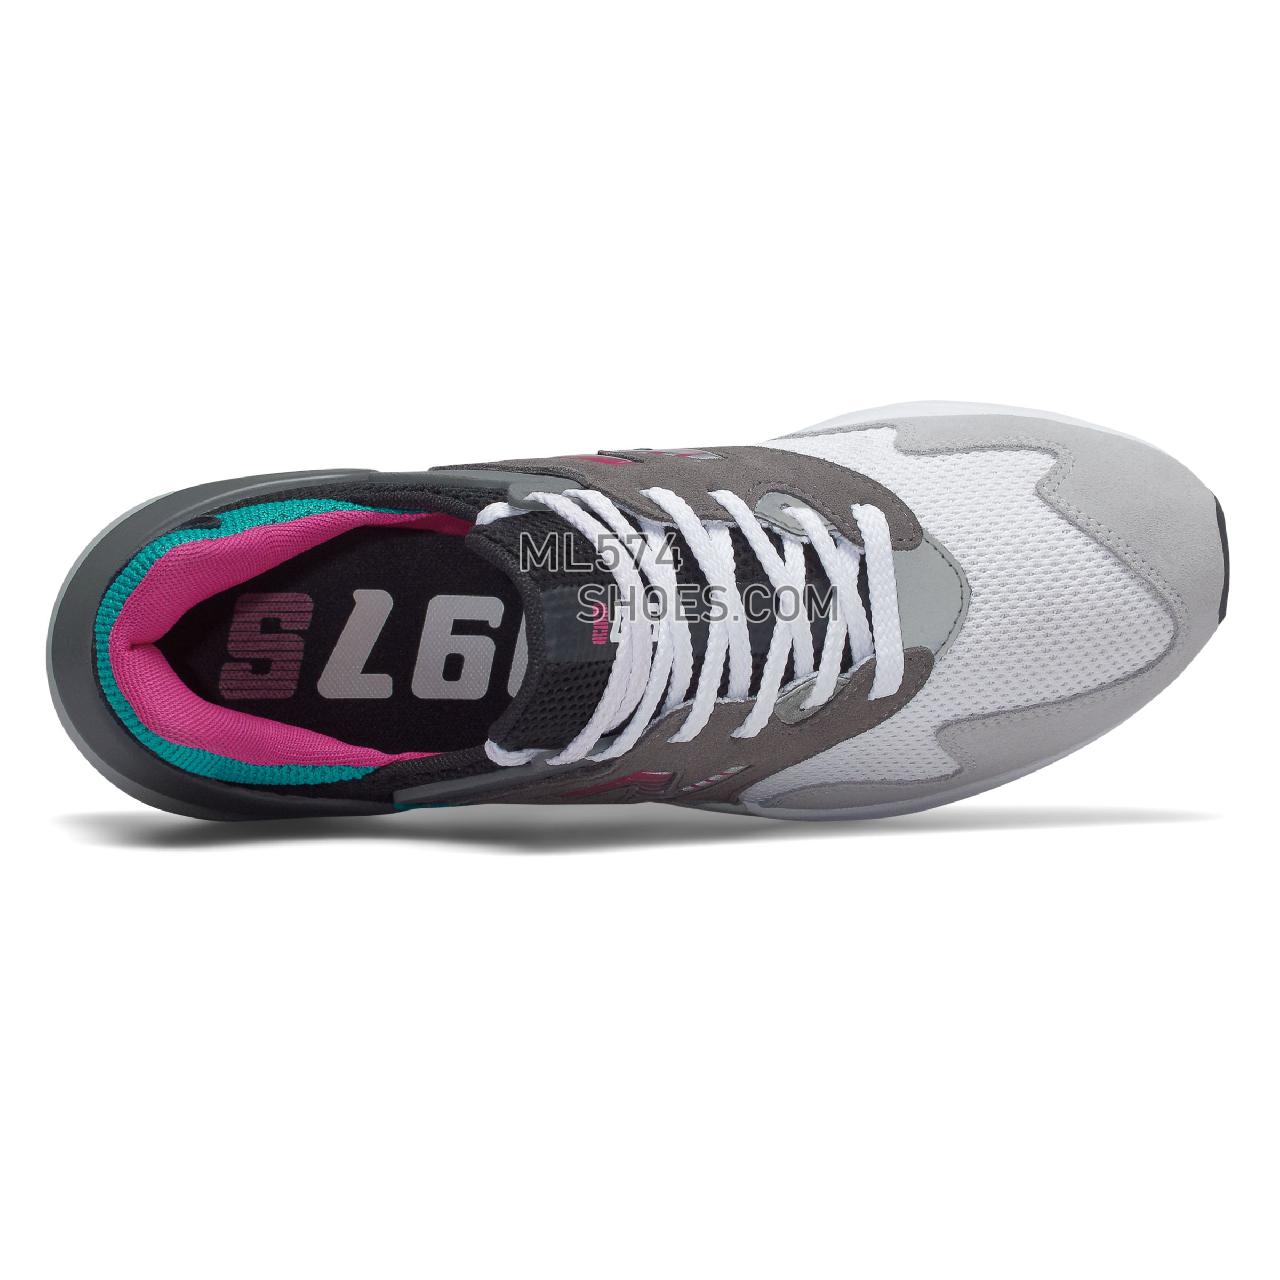 New Balance 997 Sport - Men's Sport Style Sneakers - Castlerock with Amazonite - MS997JCF